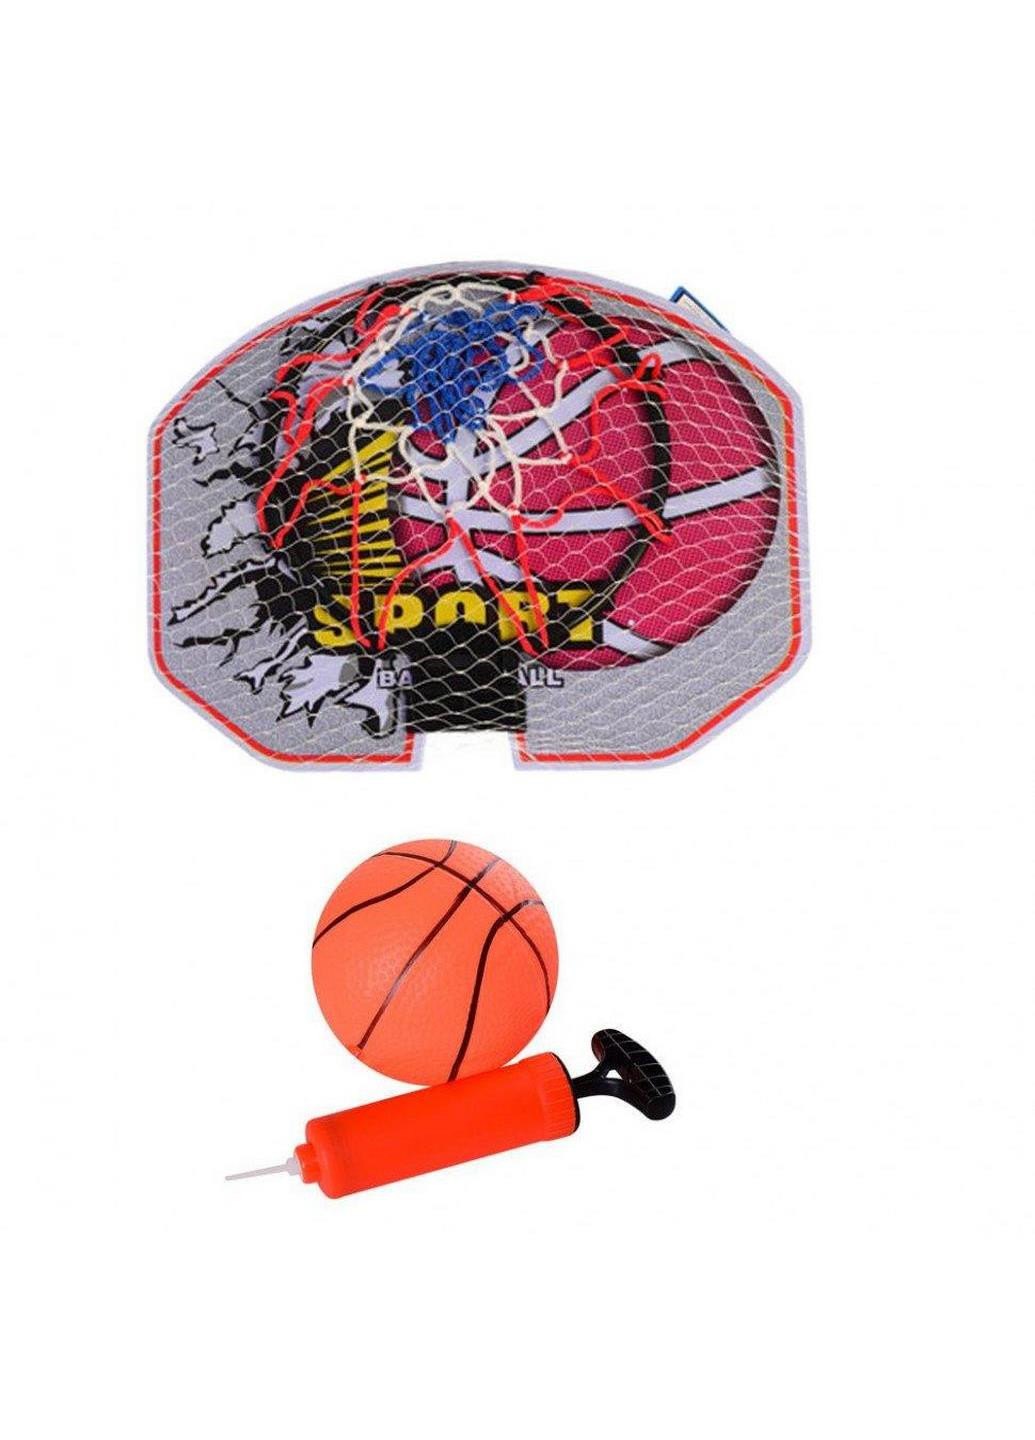 Игровой набор Баскетбол MR 0329 кольцо 22 см (Sport-Basketball) Metr+ (238104495)